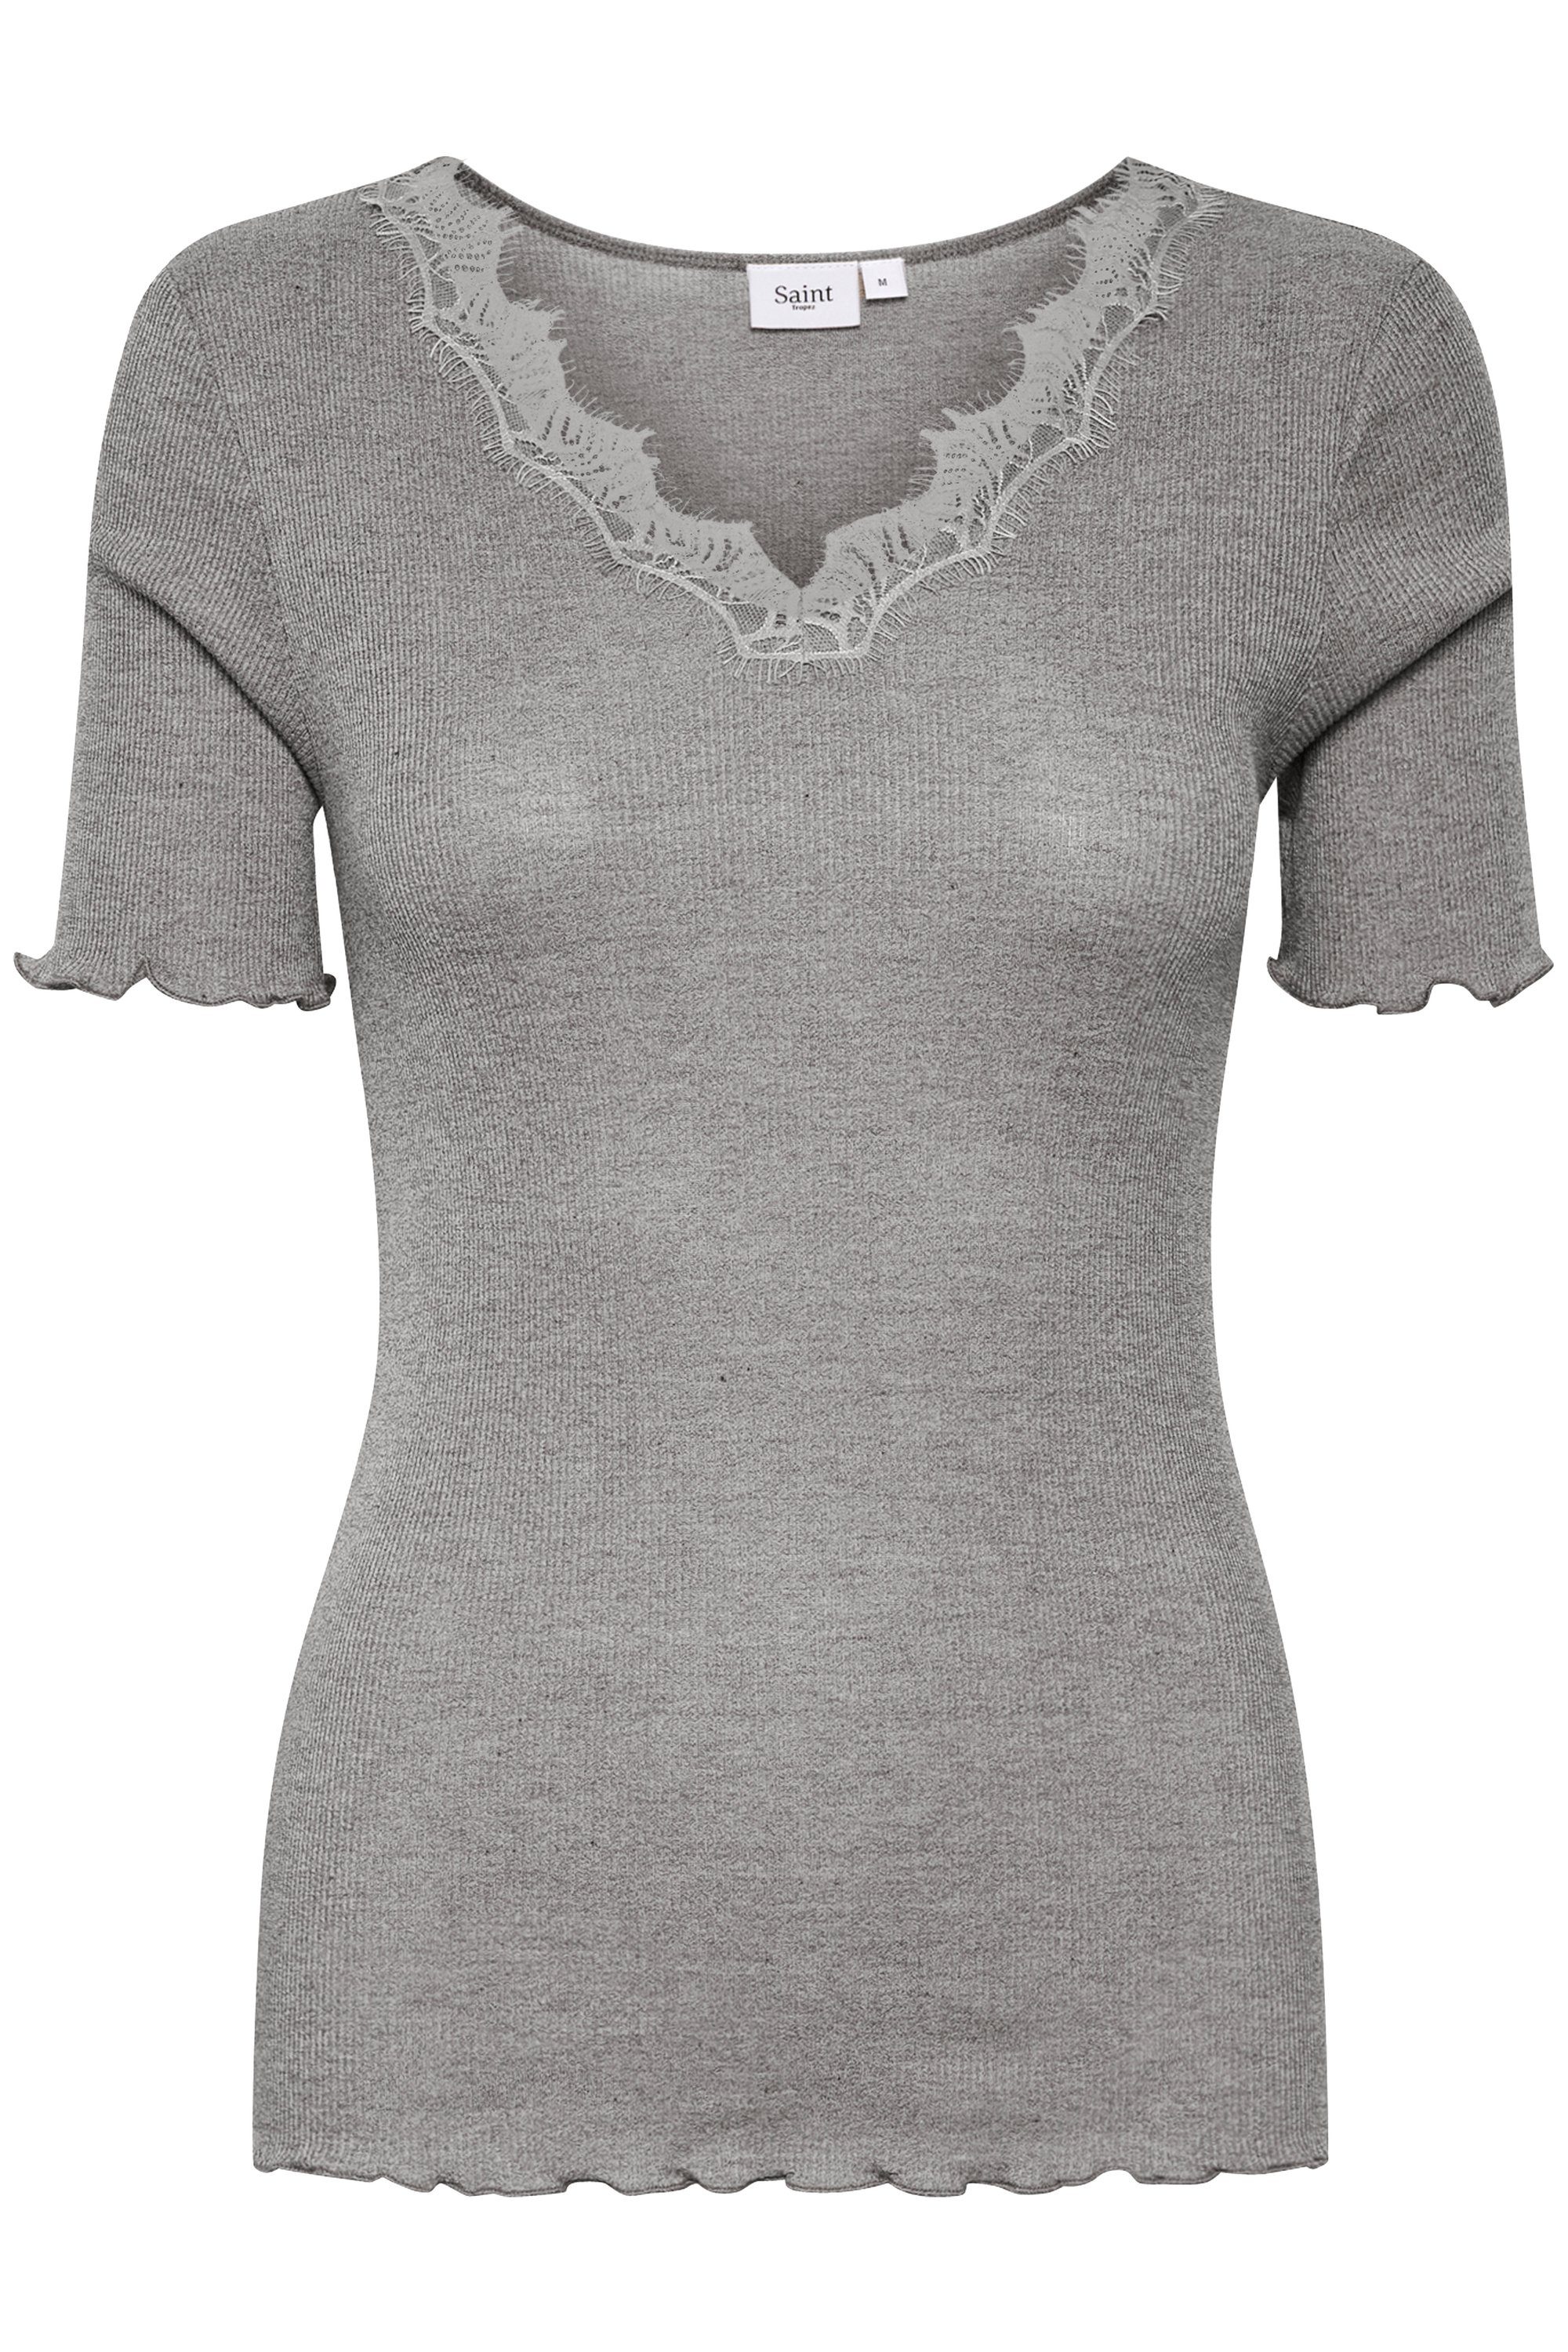 T-Shirt Tropez Melange T-shirt MayaSZ Saint Mist Grey